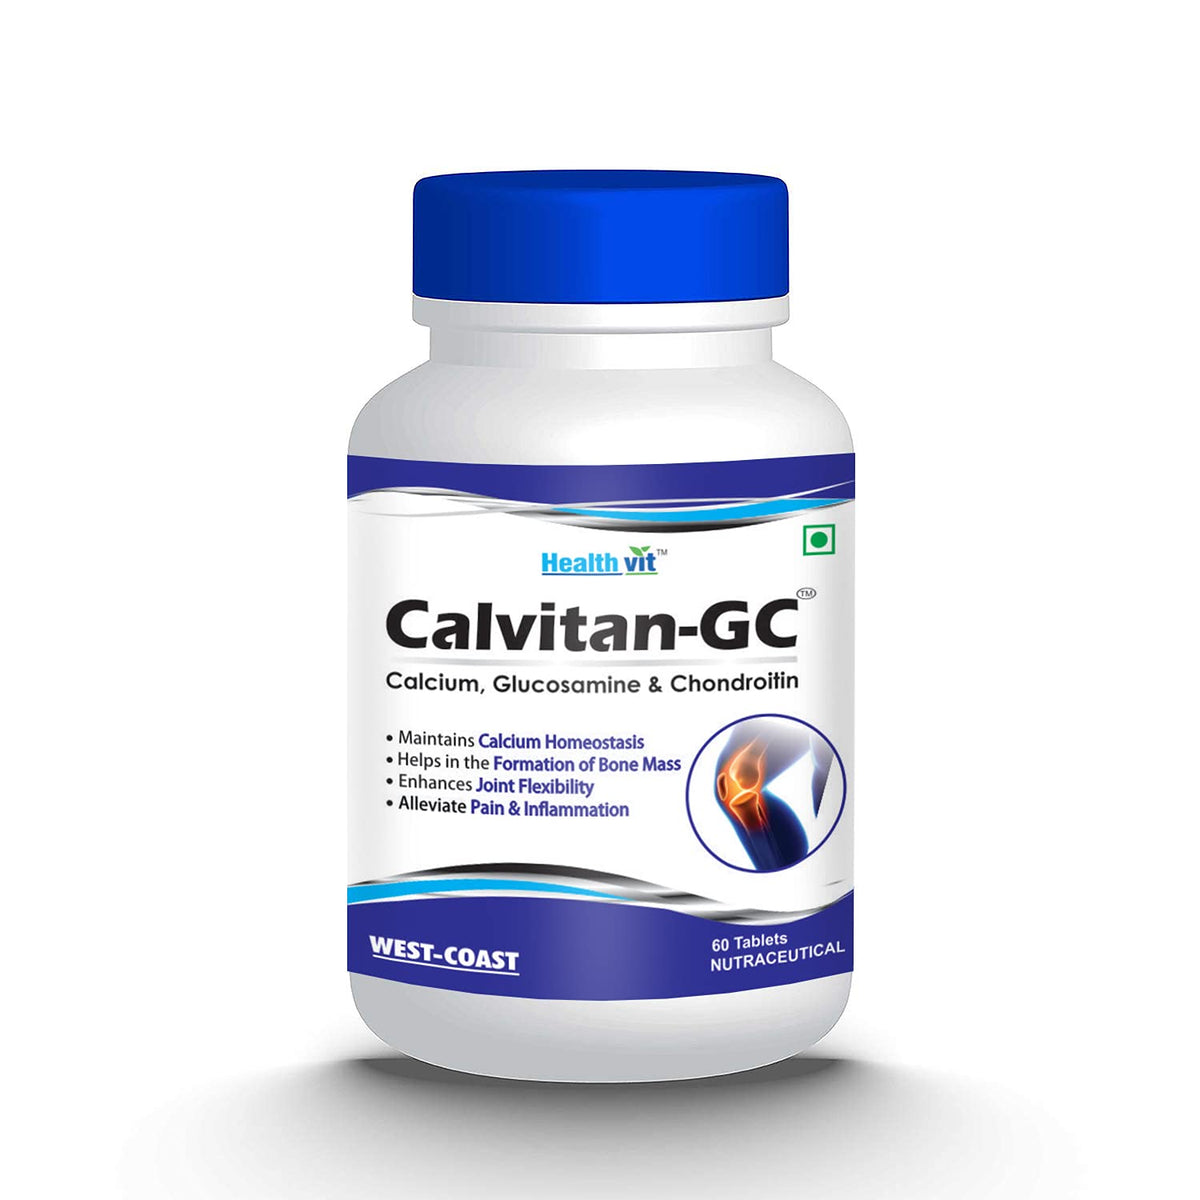 Healthvit Calvitan-GC Calcium, Glucosamine & Chondroitin Ideal for Bone, Muscle Health & Joint Support of Men & Women - 60 Tablets